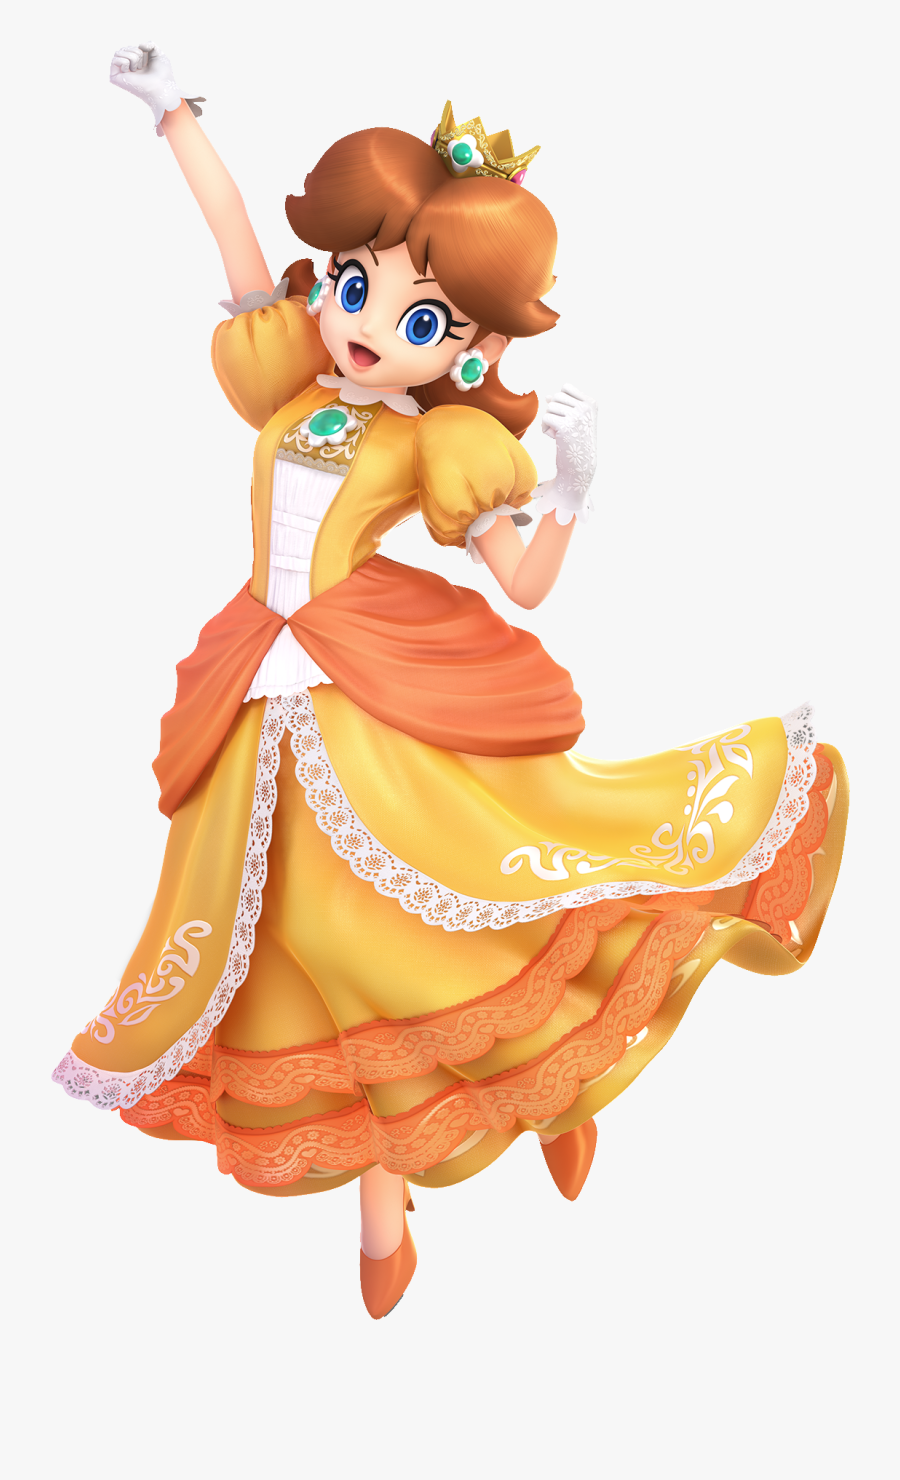 Transparent Buff Arms Png - Princess Daisy Mario, Transparent Clipart